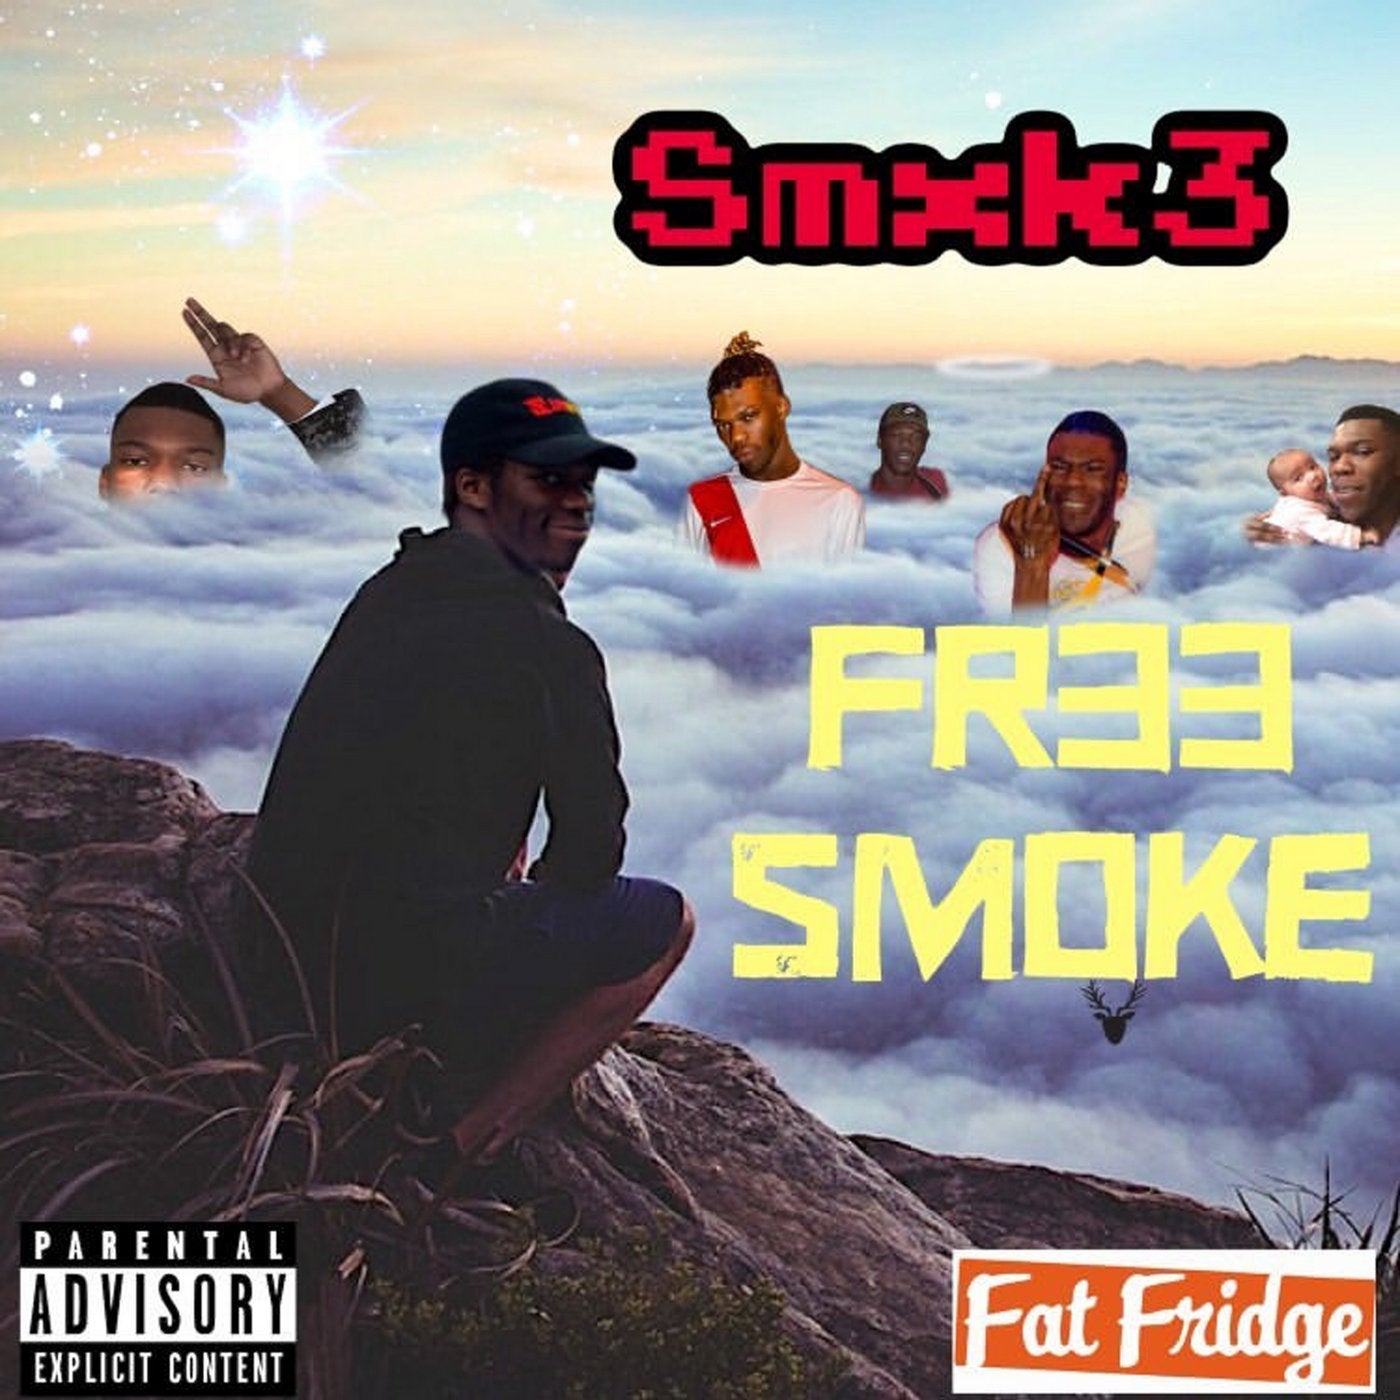 Fr33 Smoke